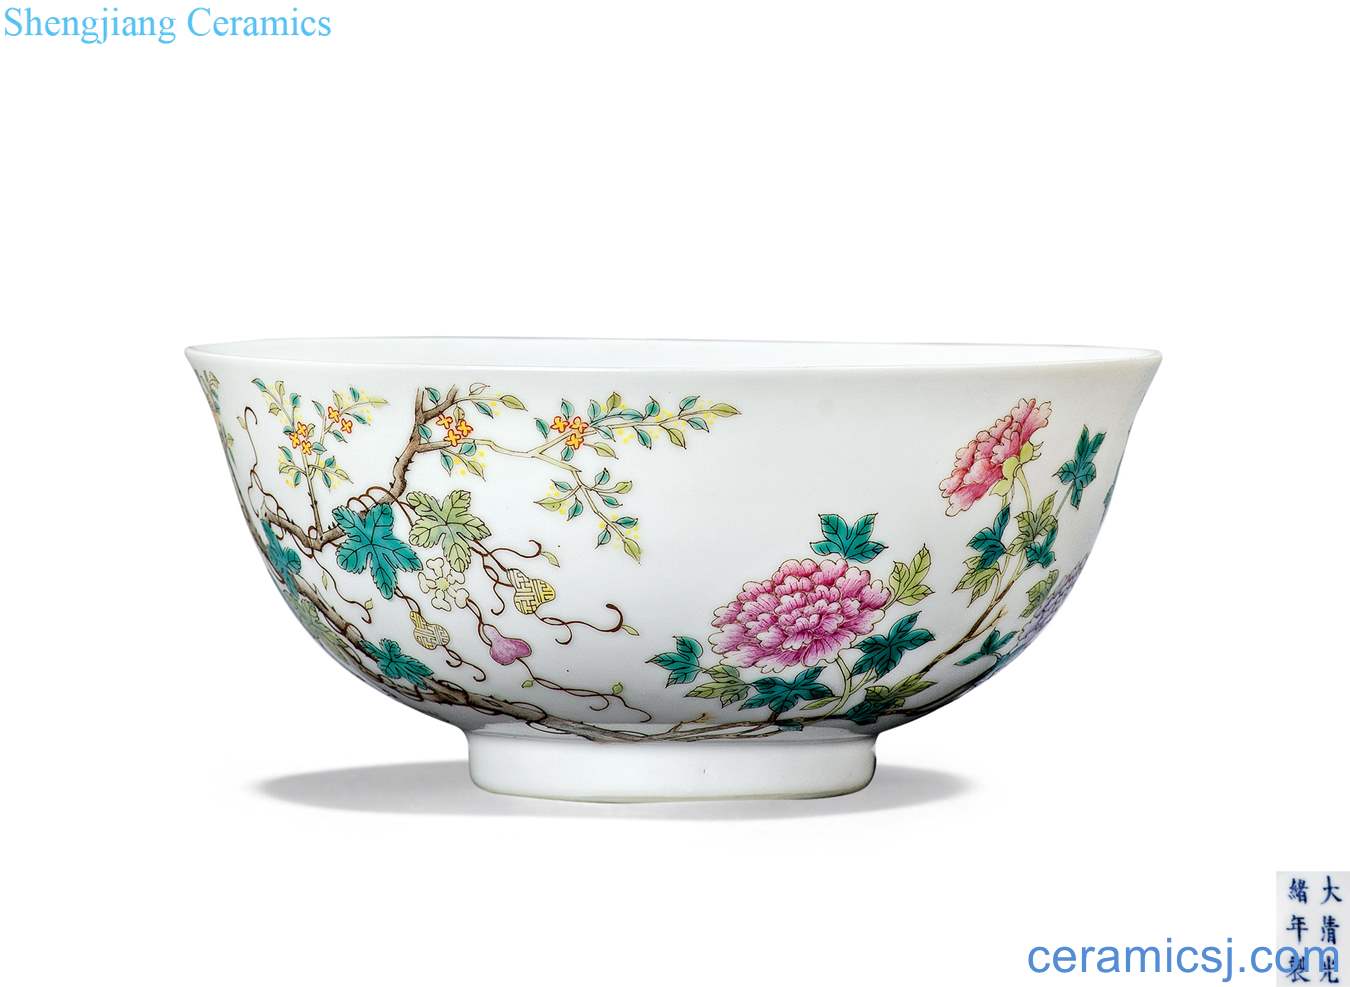 Pastel flowers reign of qing emperor guangxu green-splashed bowls